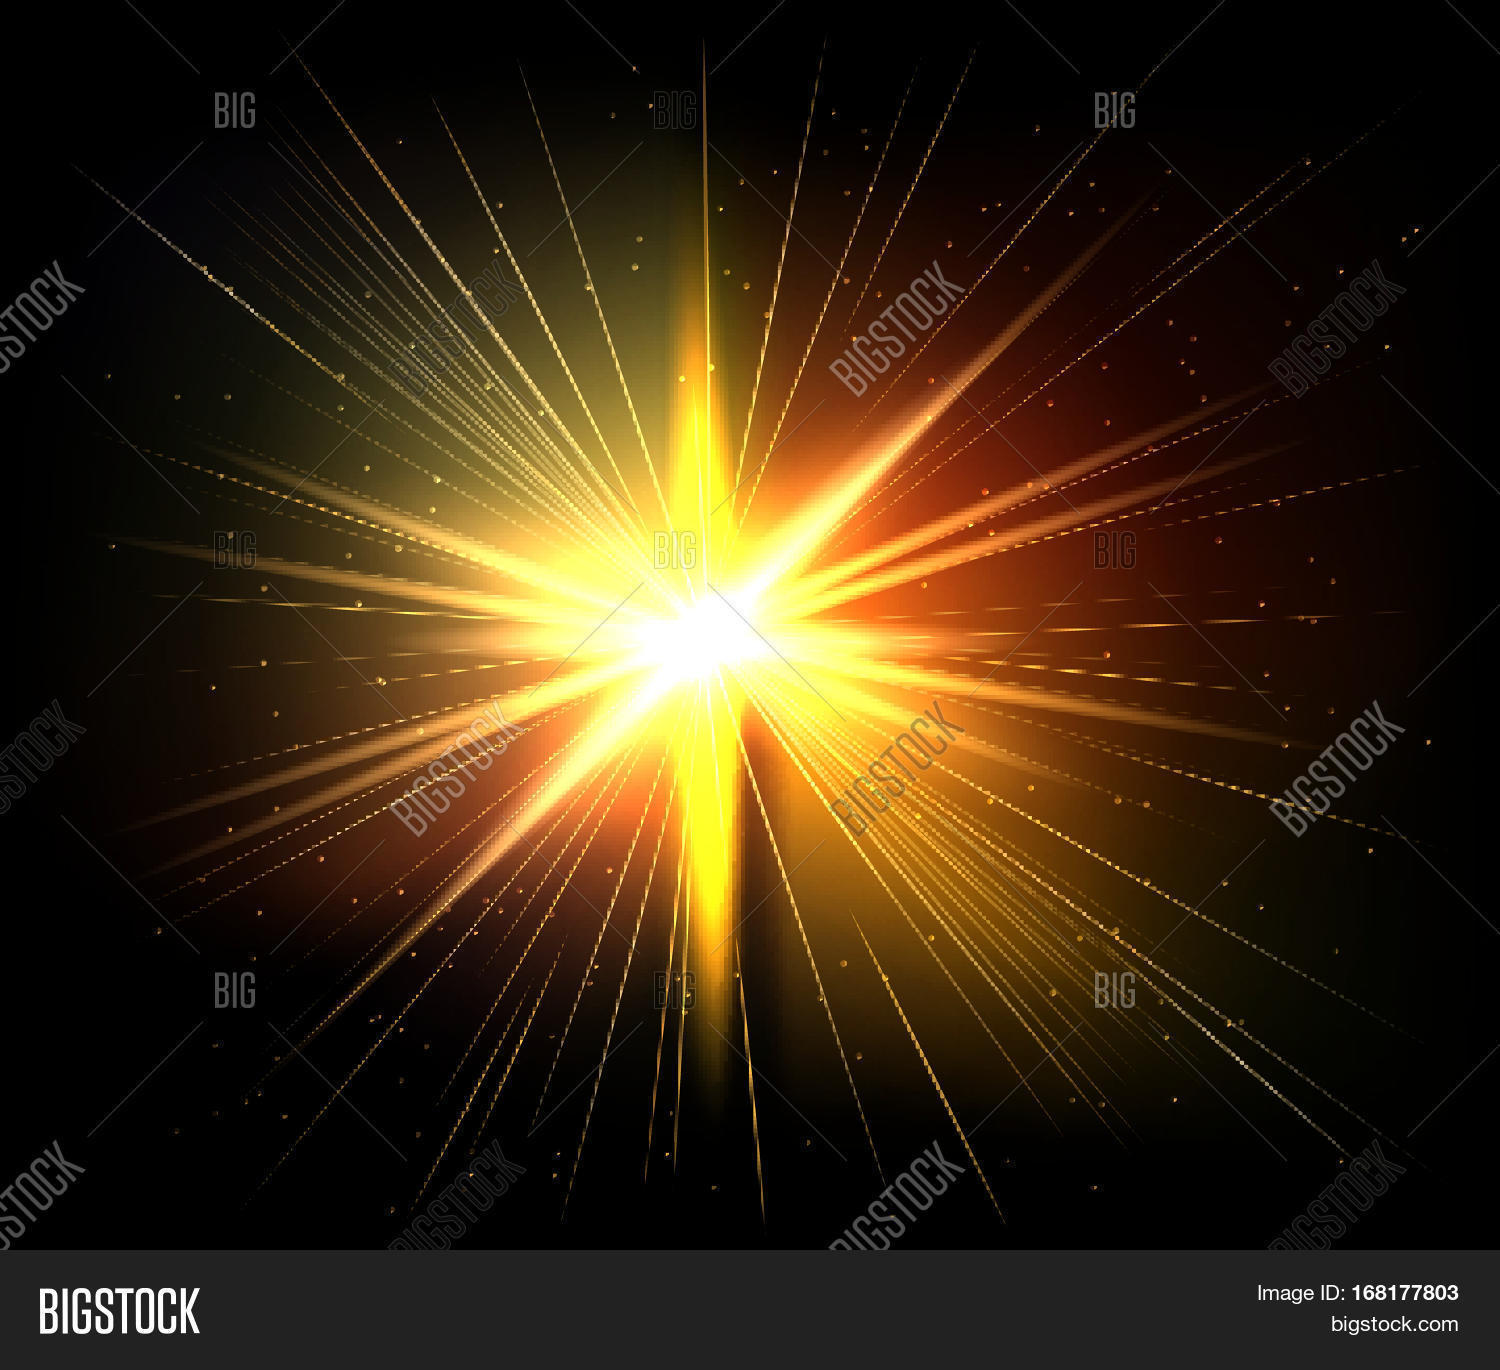 Spark Vector Light Effects. Golden Vector & Photo | Bigstock